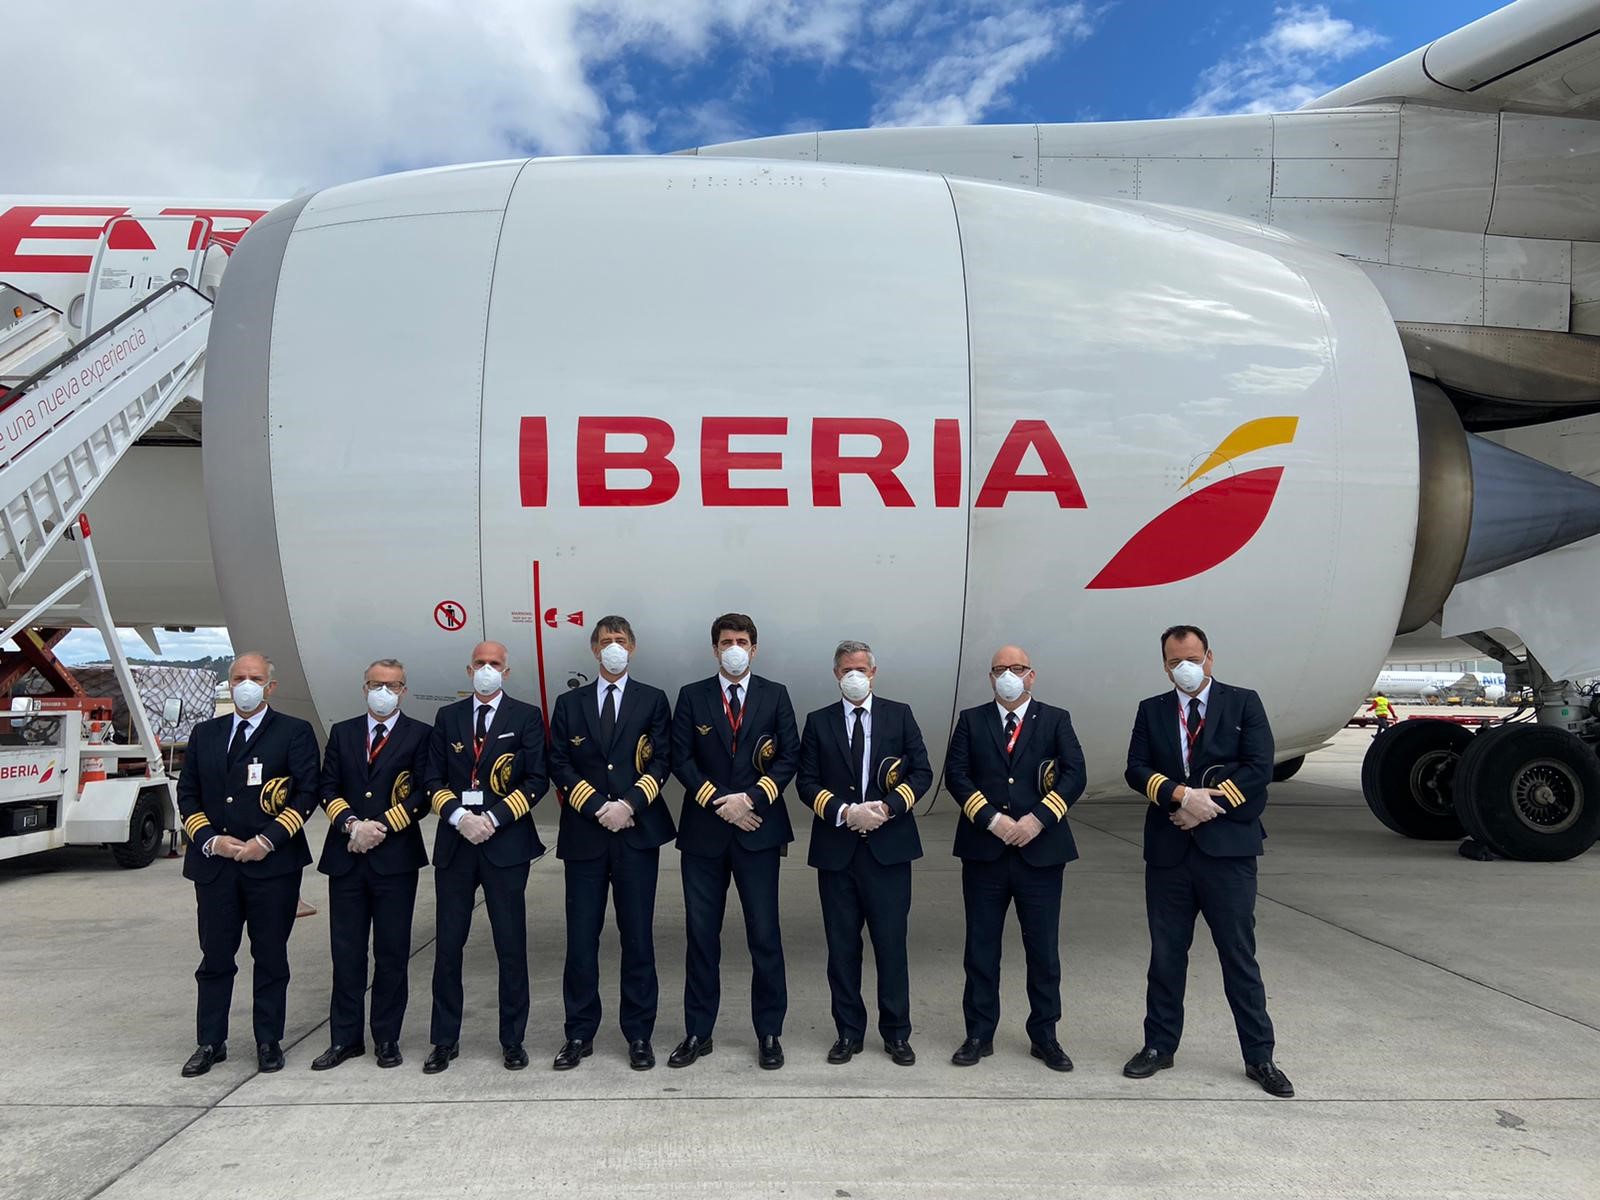 Iberia pilots standing next to a plane jet engine